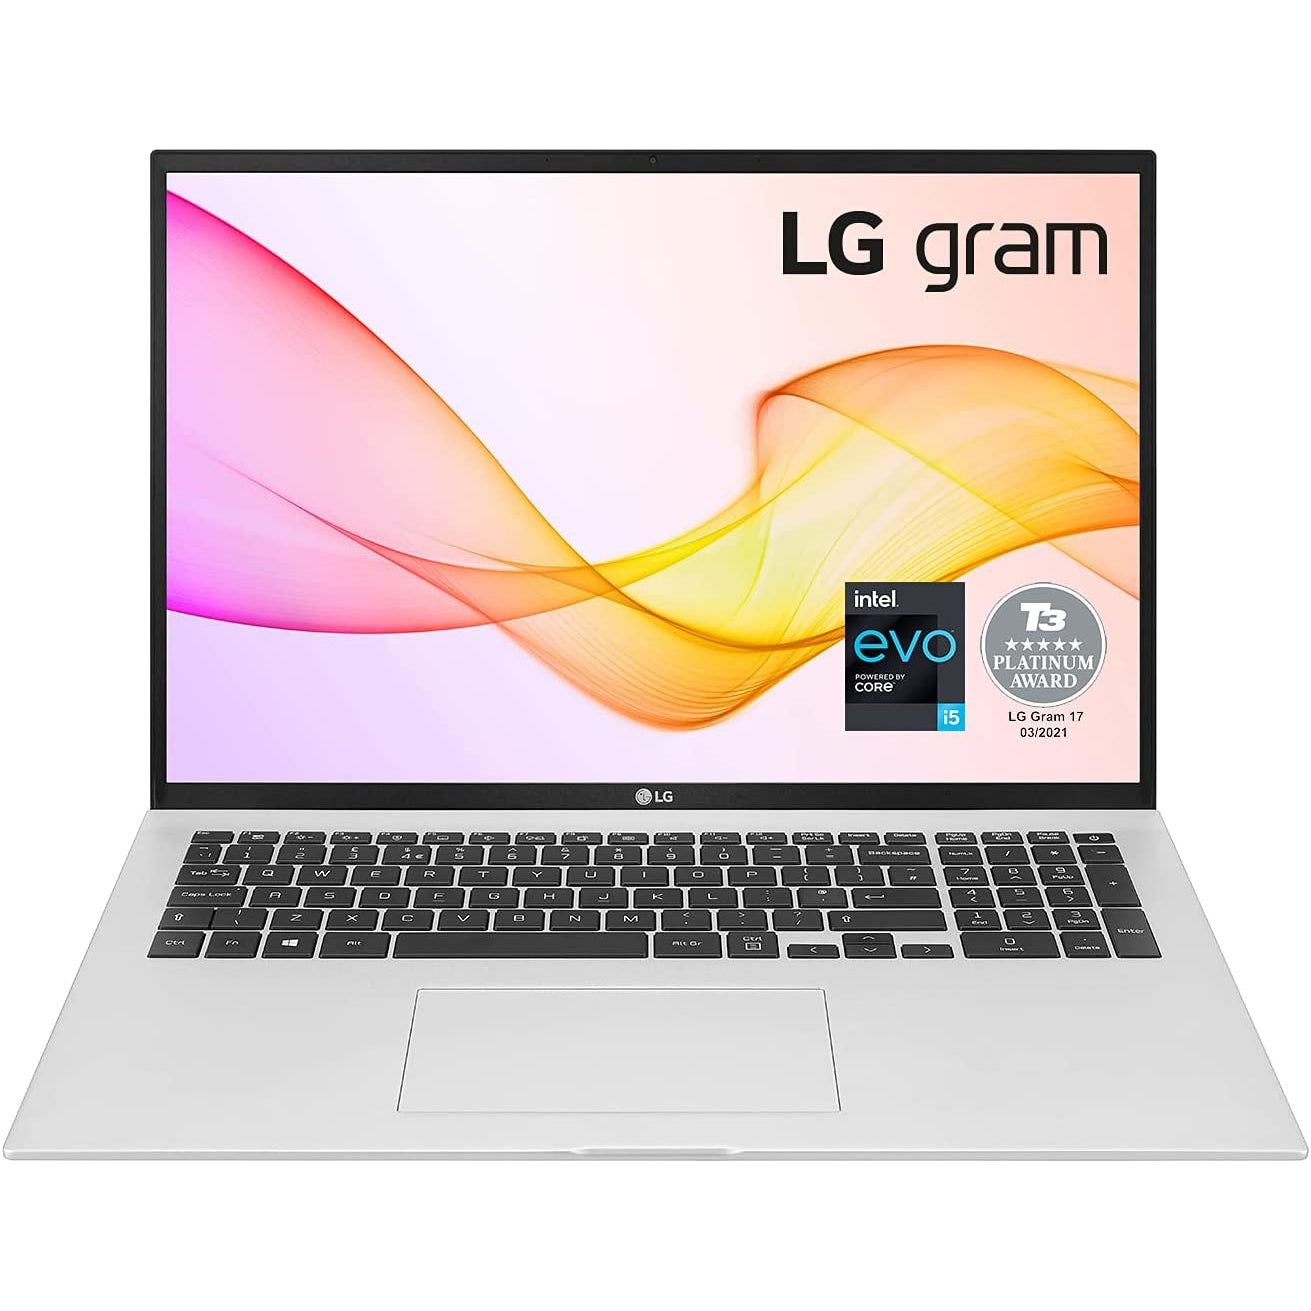 LG Gram 17Z90P 17" Laptop, Intel Core i5-1135G7, 512GB SSD, 8GB Ram, Silver